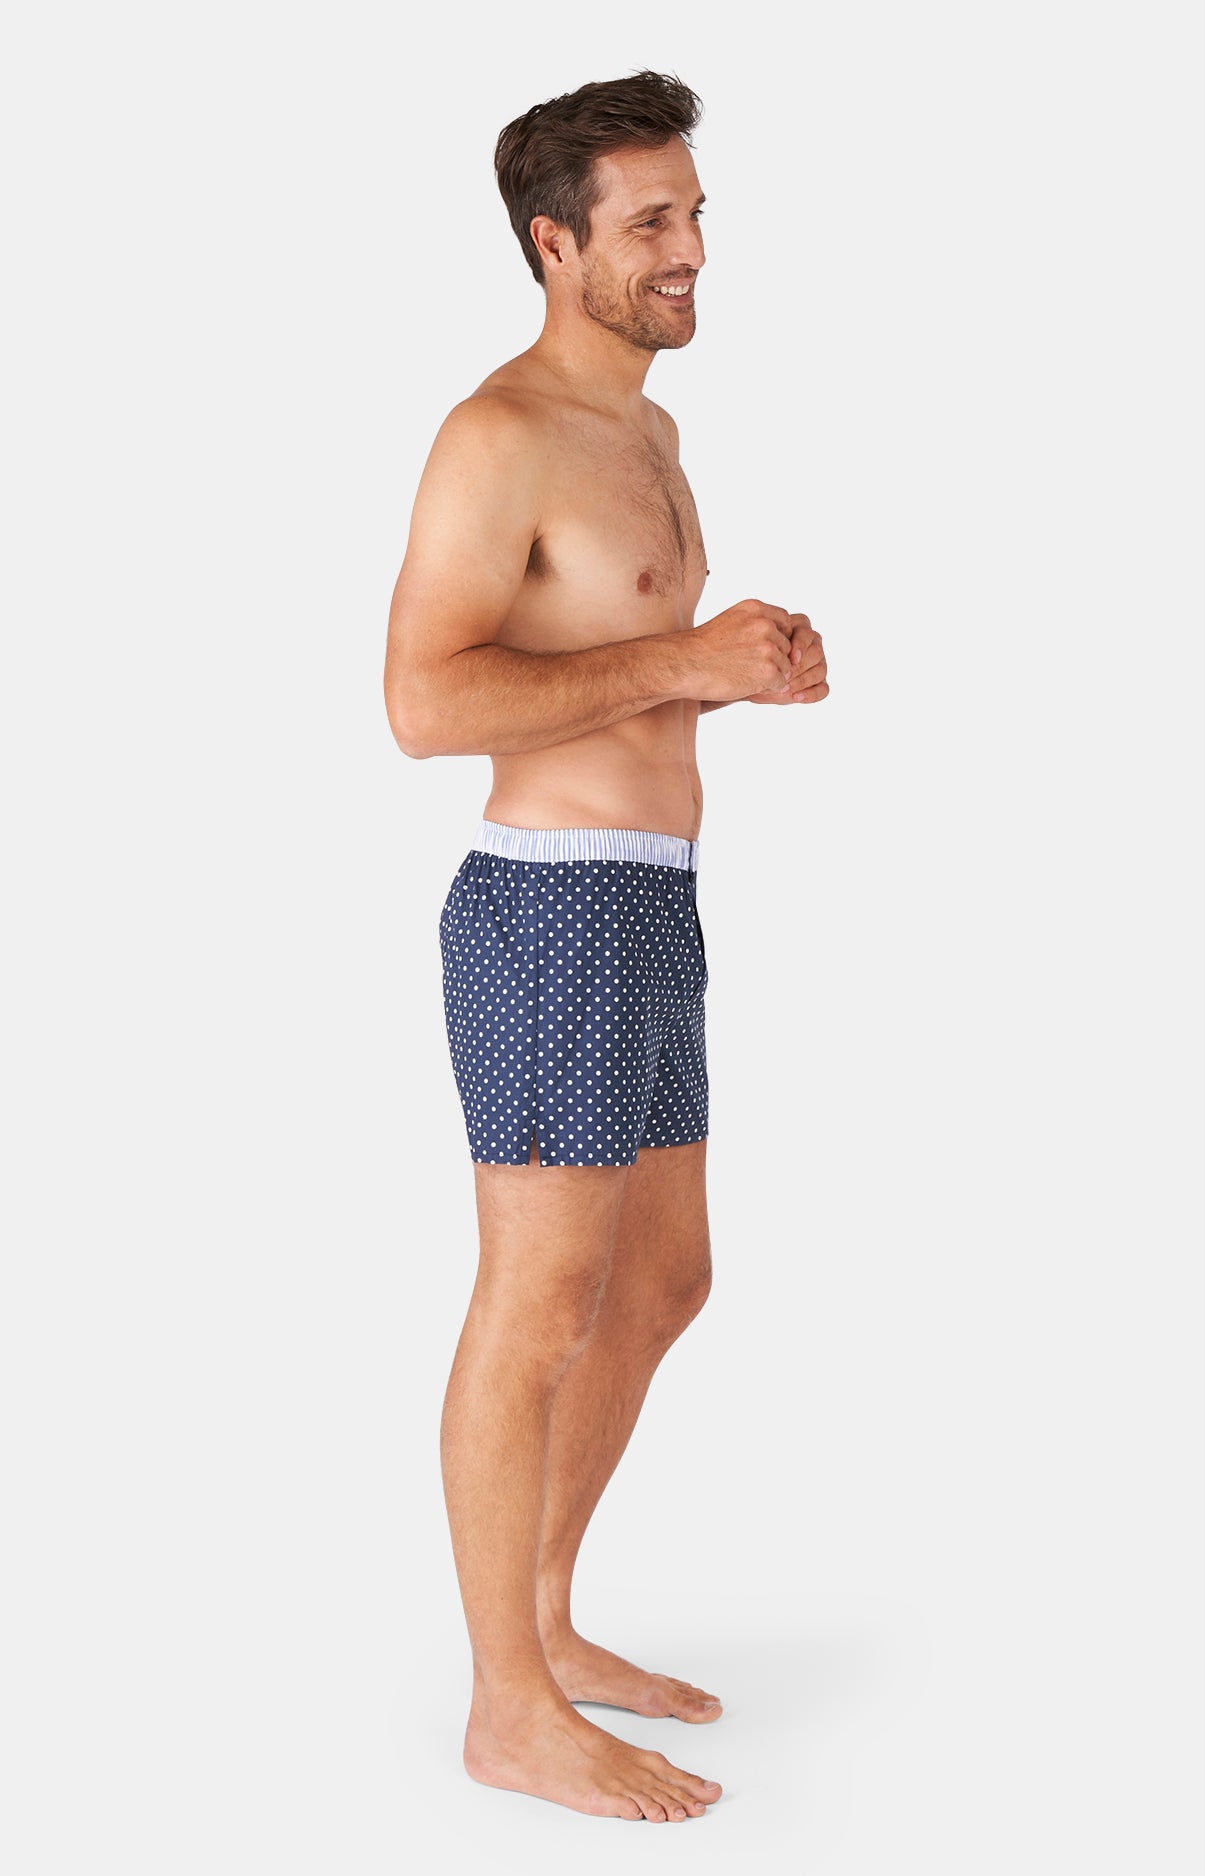 Boxer shorts with jockstrap - Le Club n°002